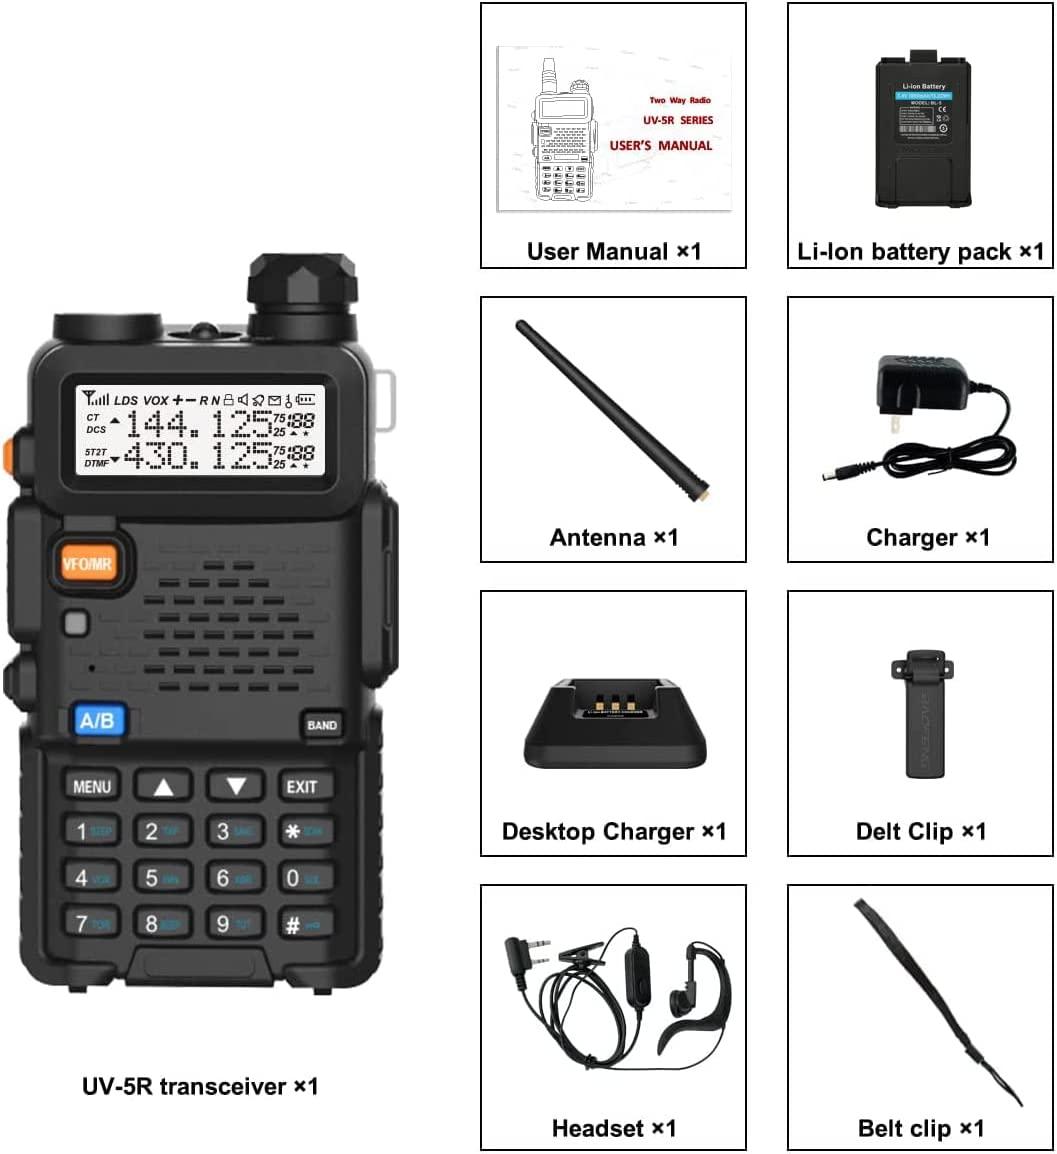 BaoFeng UV-5RA Dual Band (VHF/UHF) Two-Way Radio